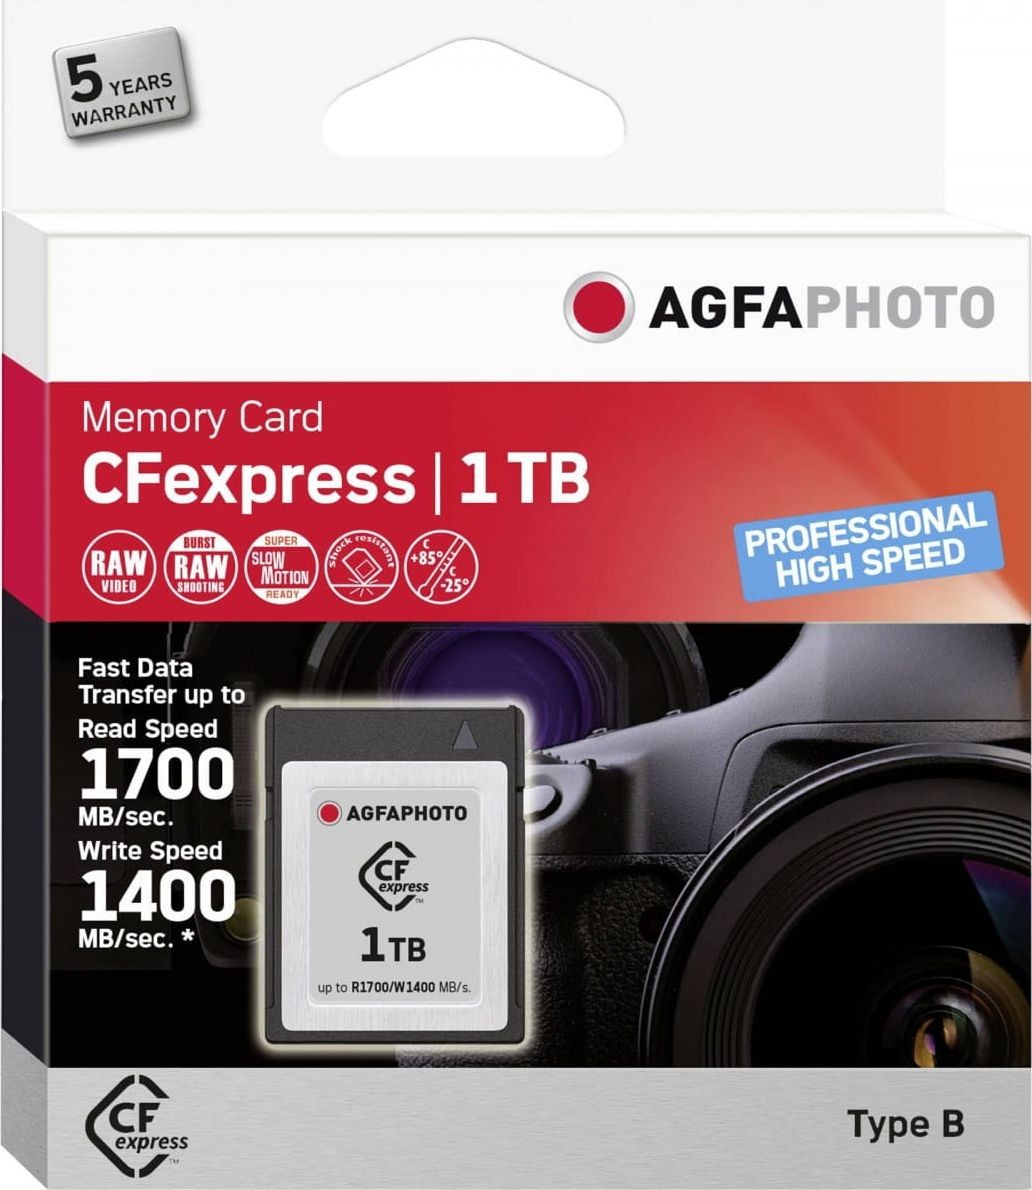 AgfaPhoto Karta Professional High Speed CFexpress 1 TB 10443 10443